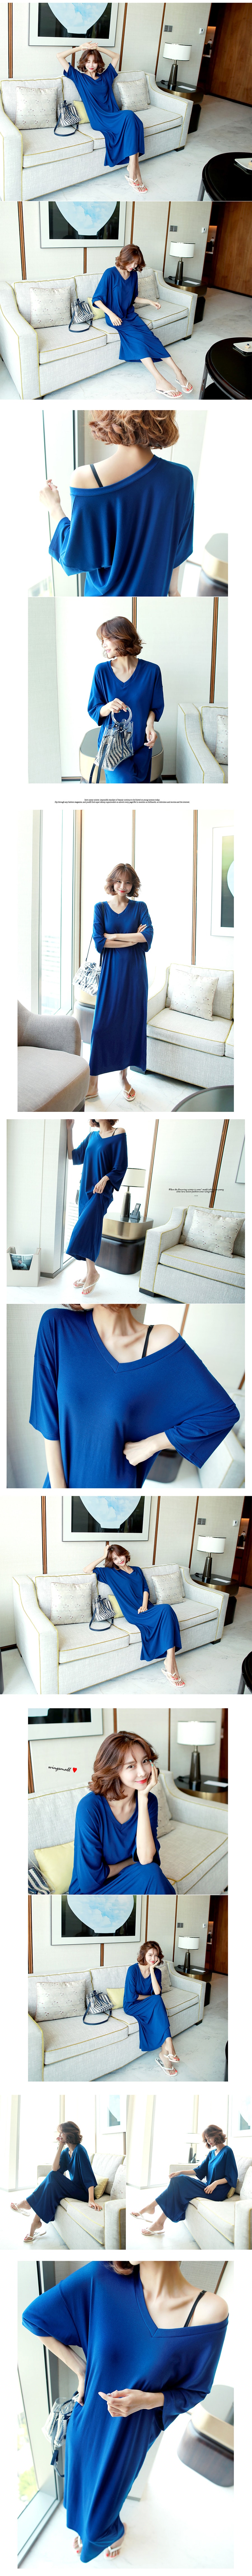 [KOREA] Natural Loose V-Neck Maxi Dress #Blue One Size(Free) [Free Shipping]